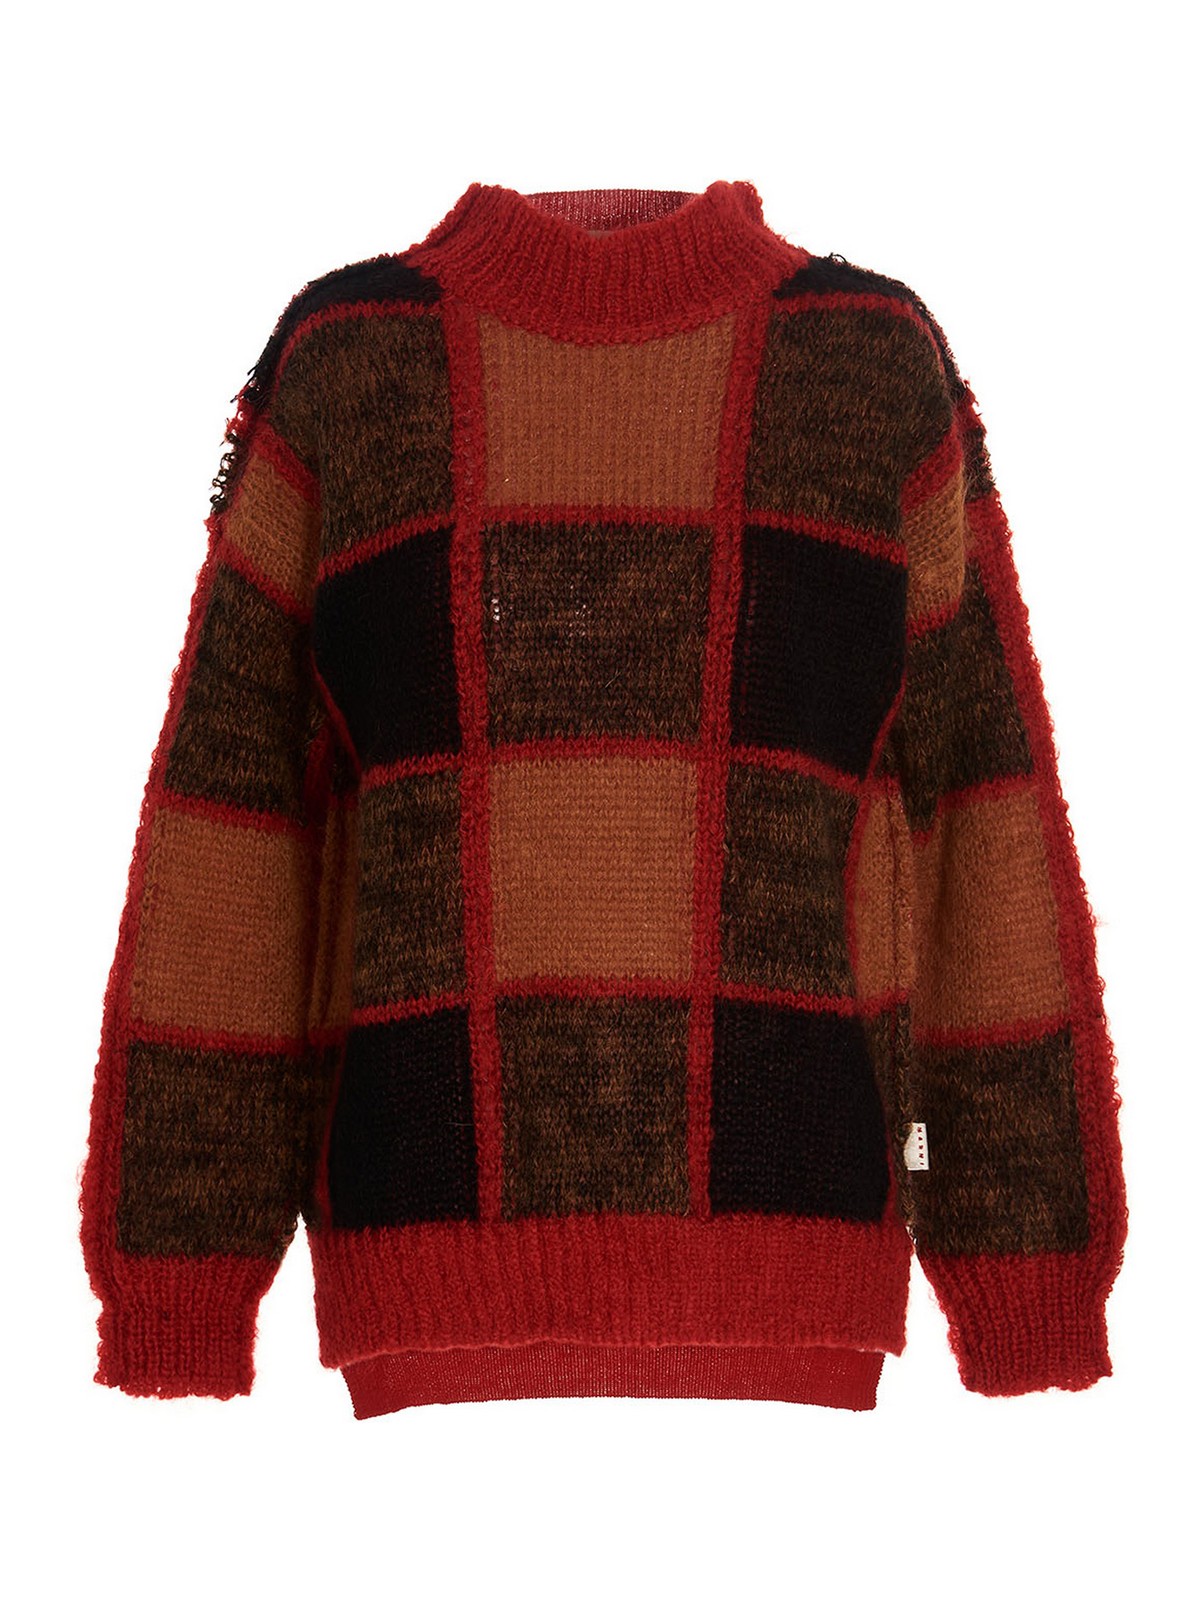 Marni Multicolored Patterned Sweater